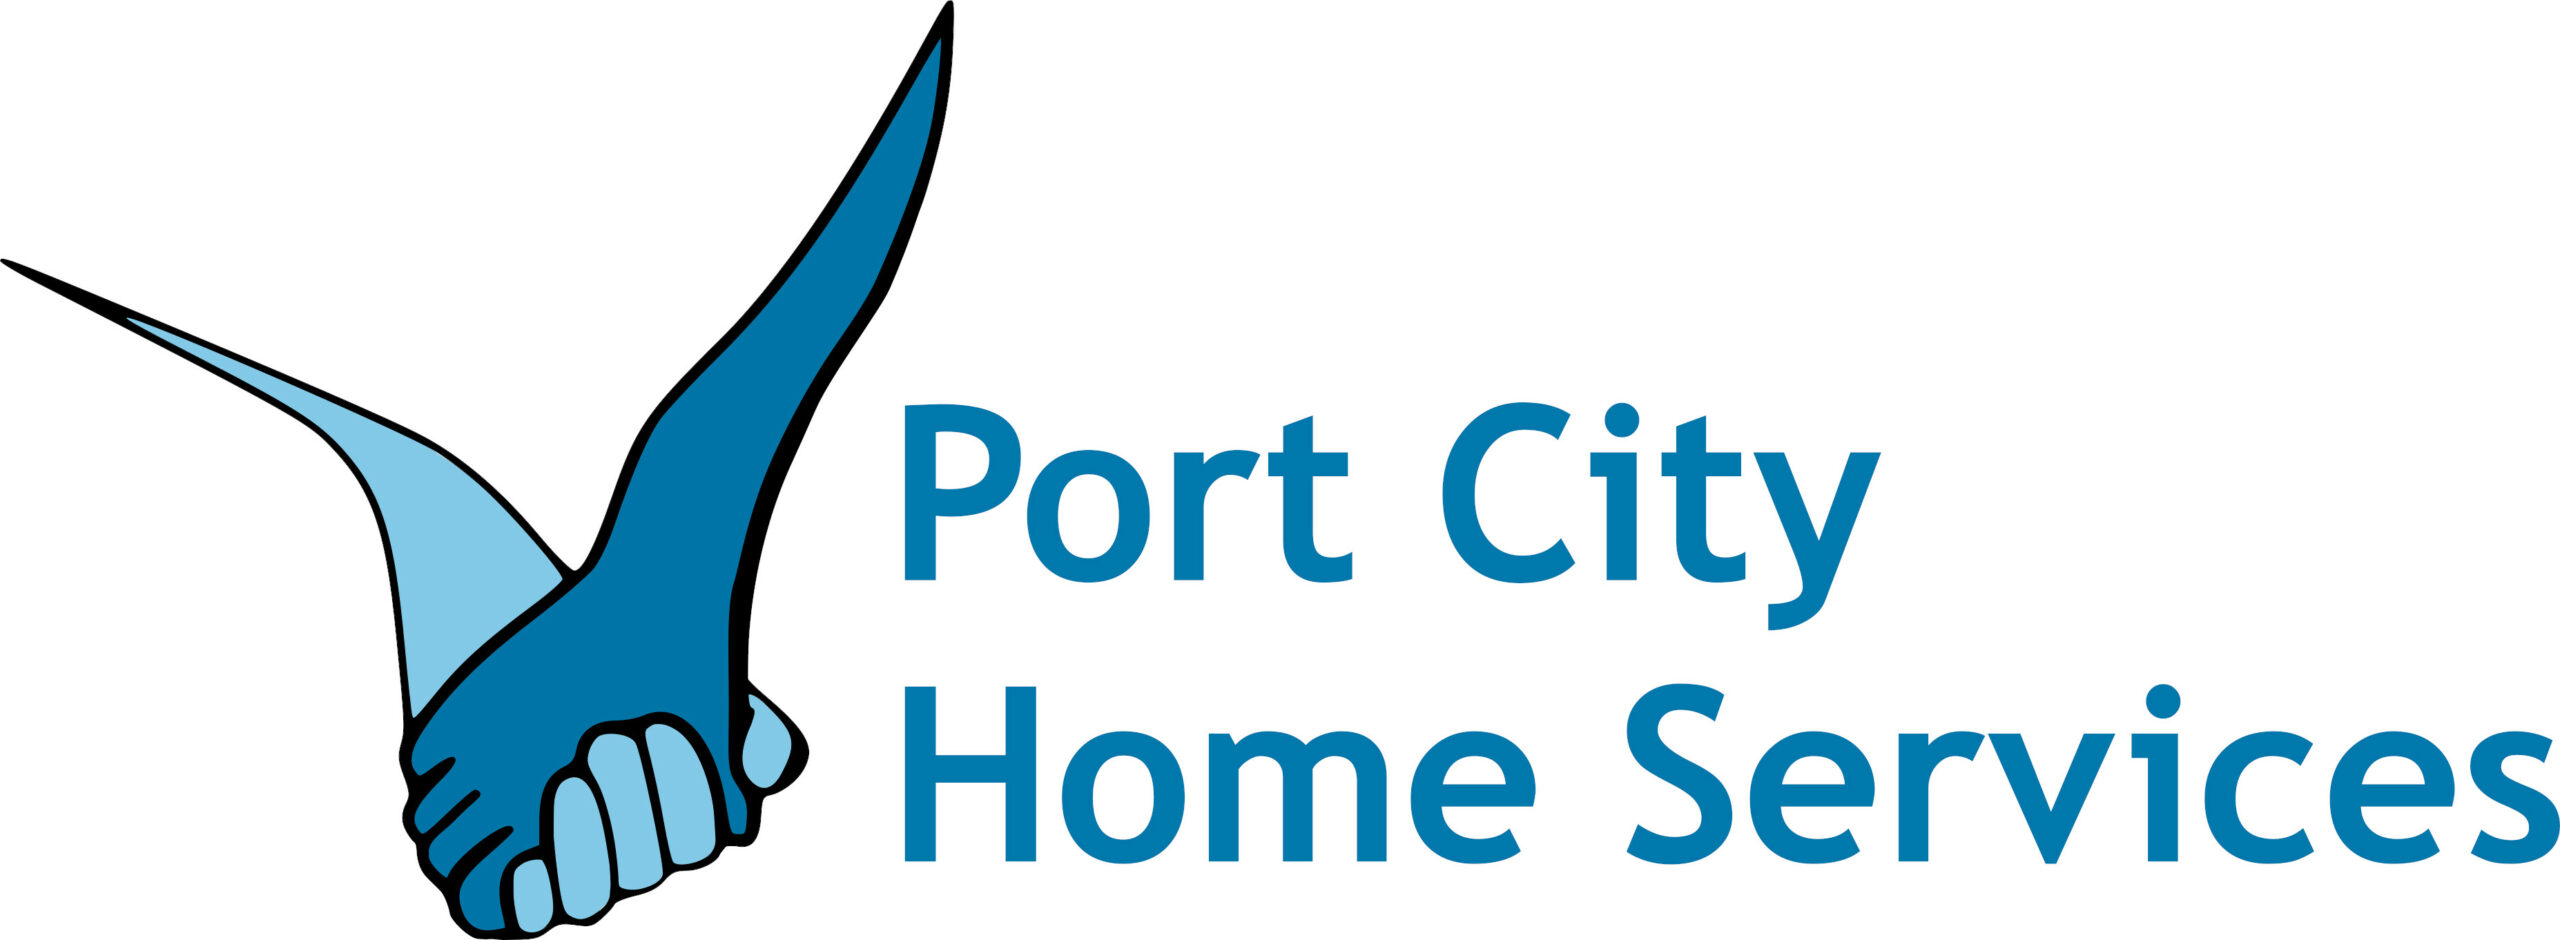 Port City Home Services